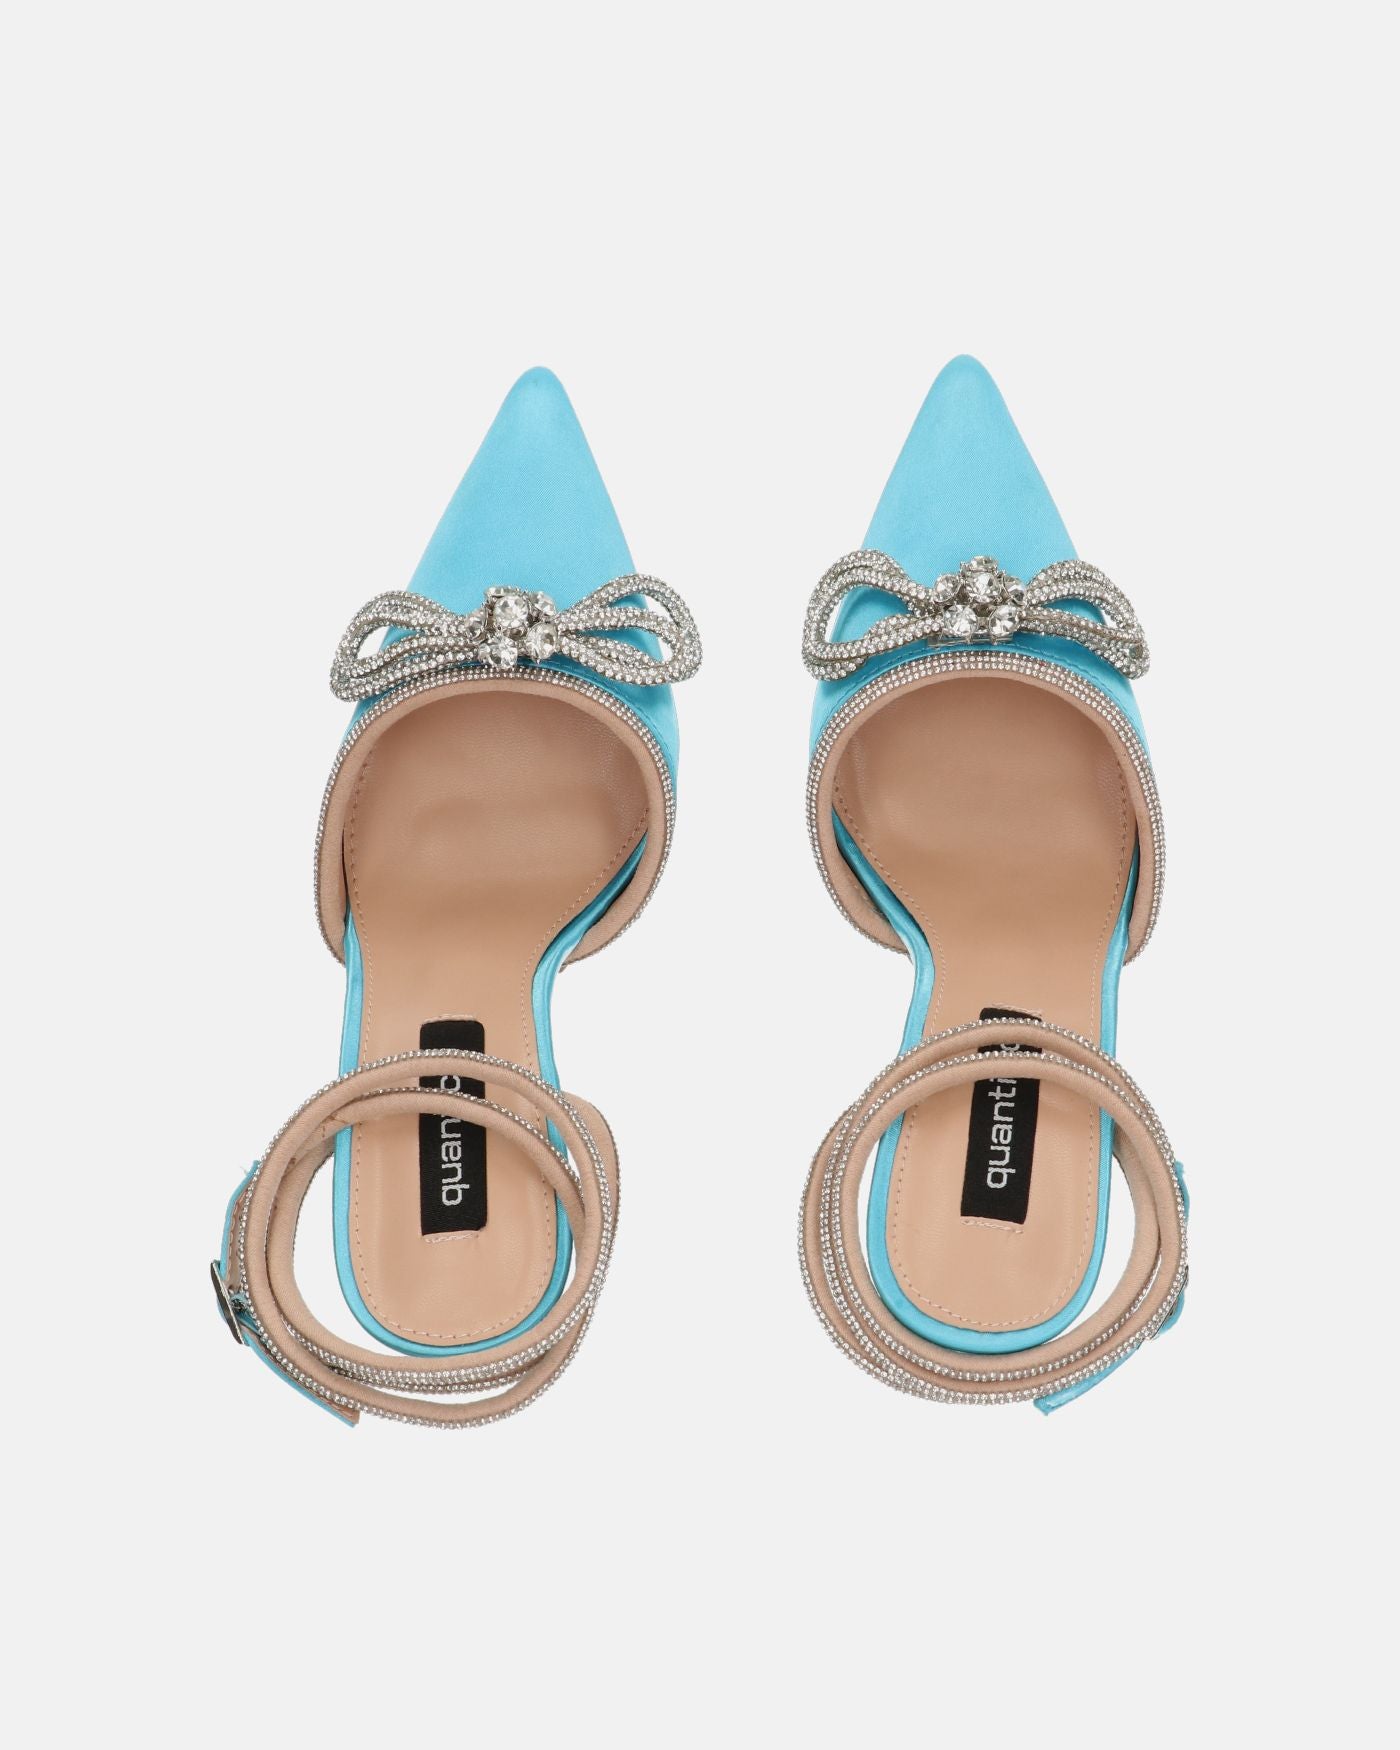 MARETA - blue heeled shoes with glitter bow